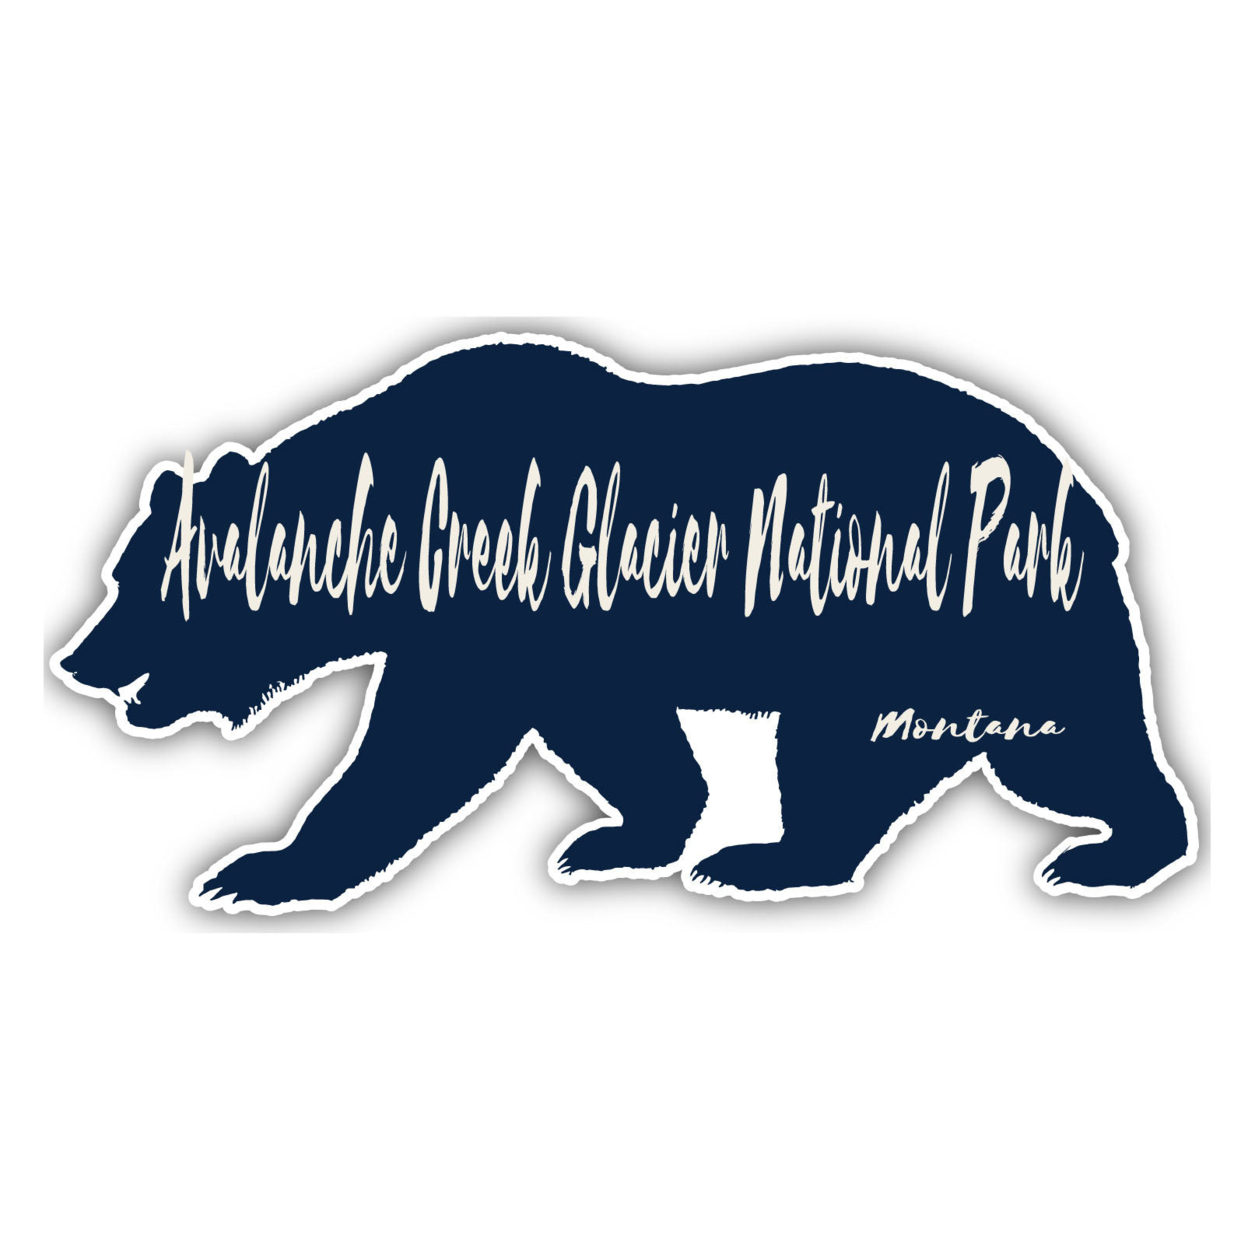 Avalanche Creek Glacier National Park Montana Souvenir Decorative Stickers (Choose Theme And Size) - Single Unit, 4-Inch, Bear